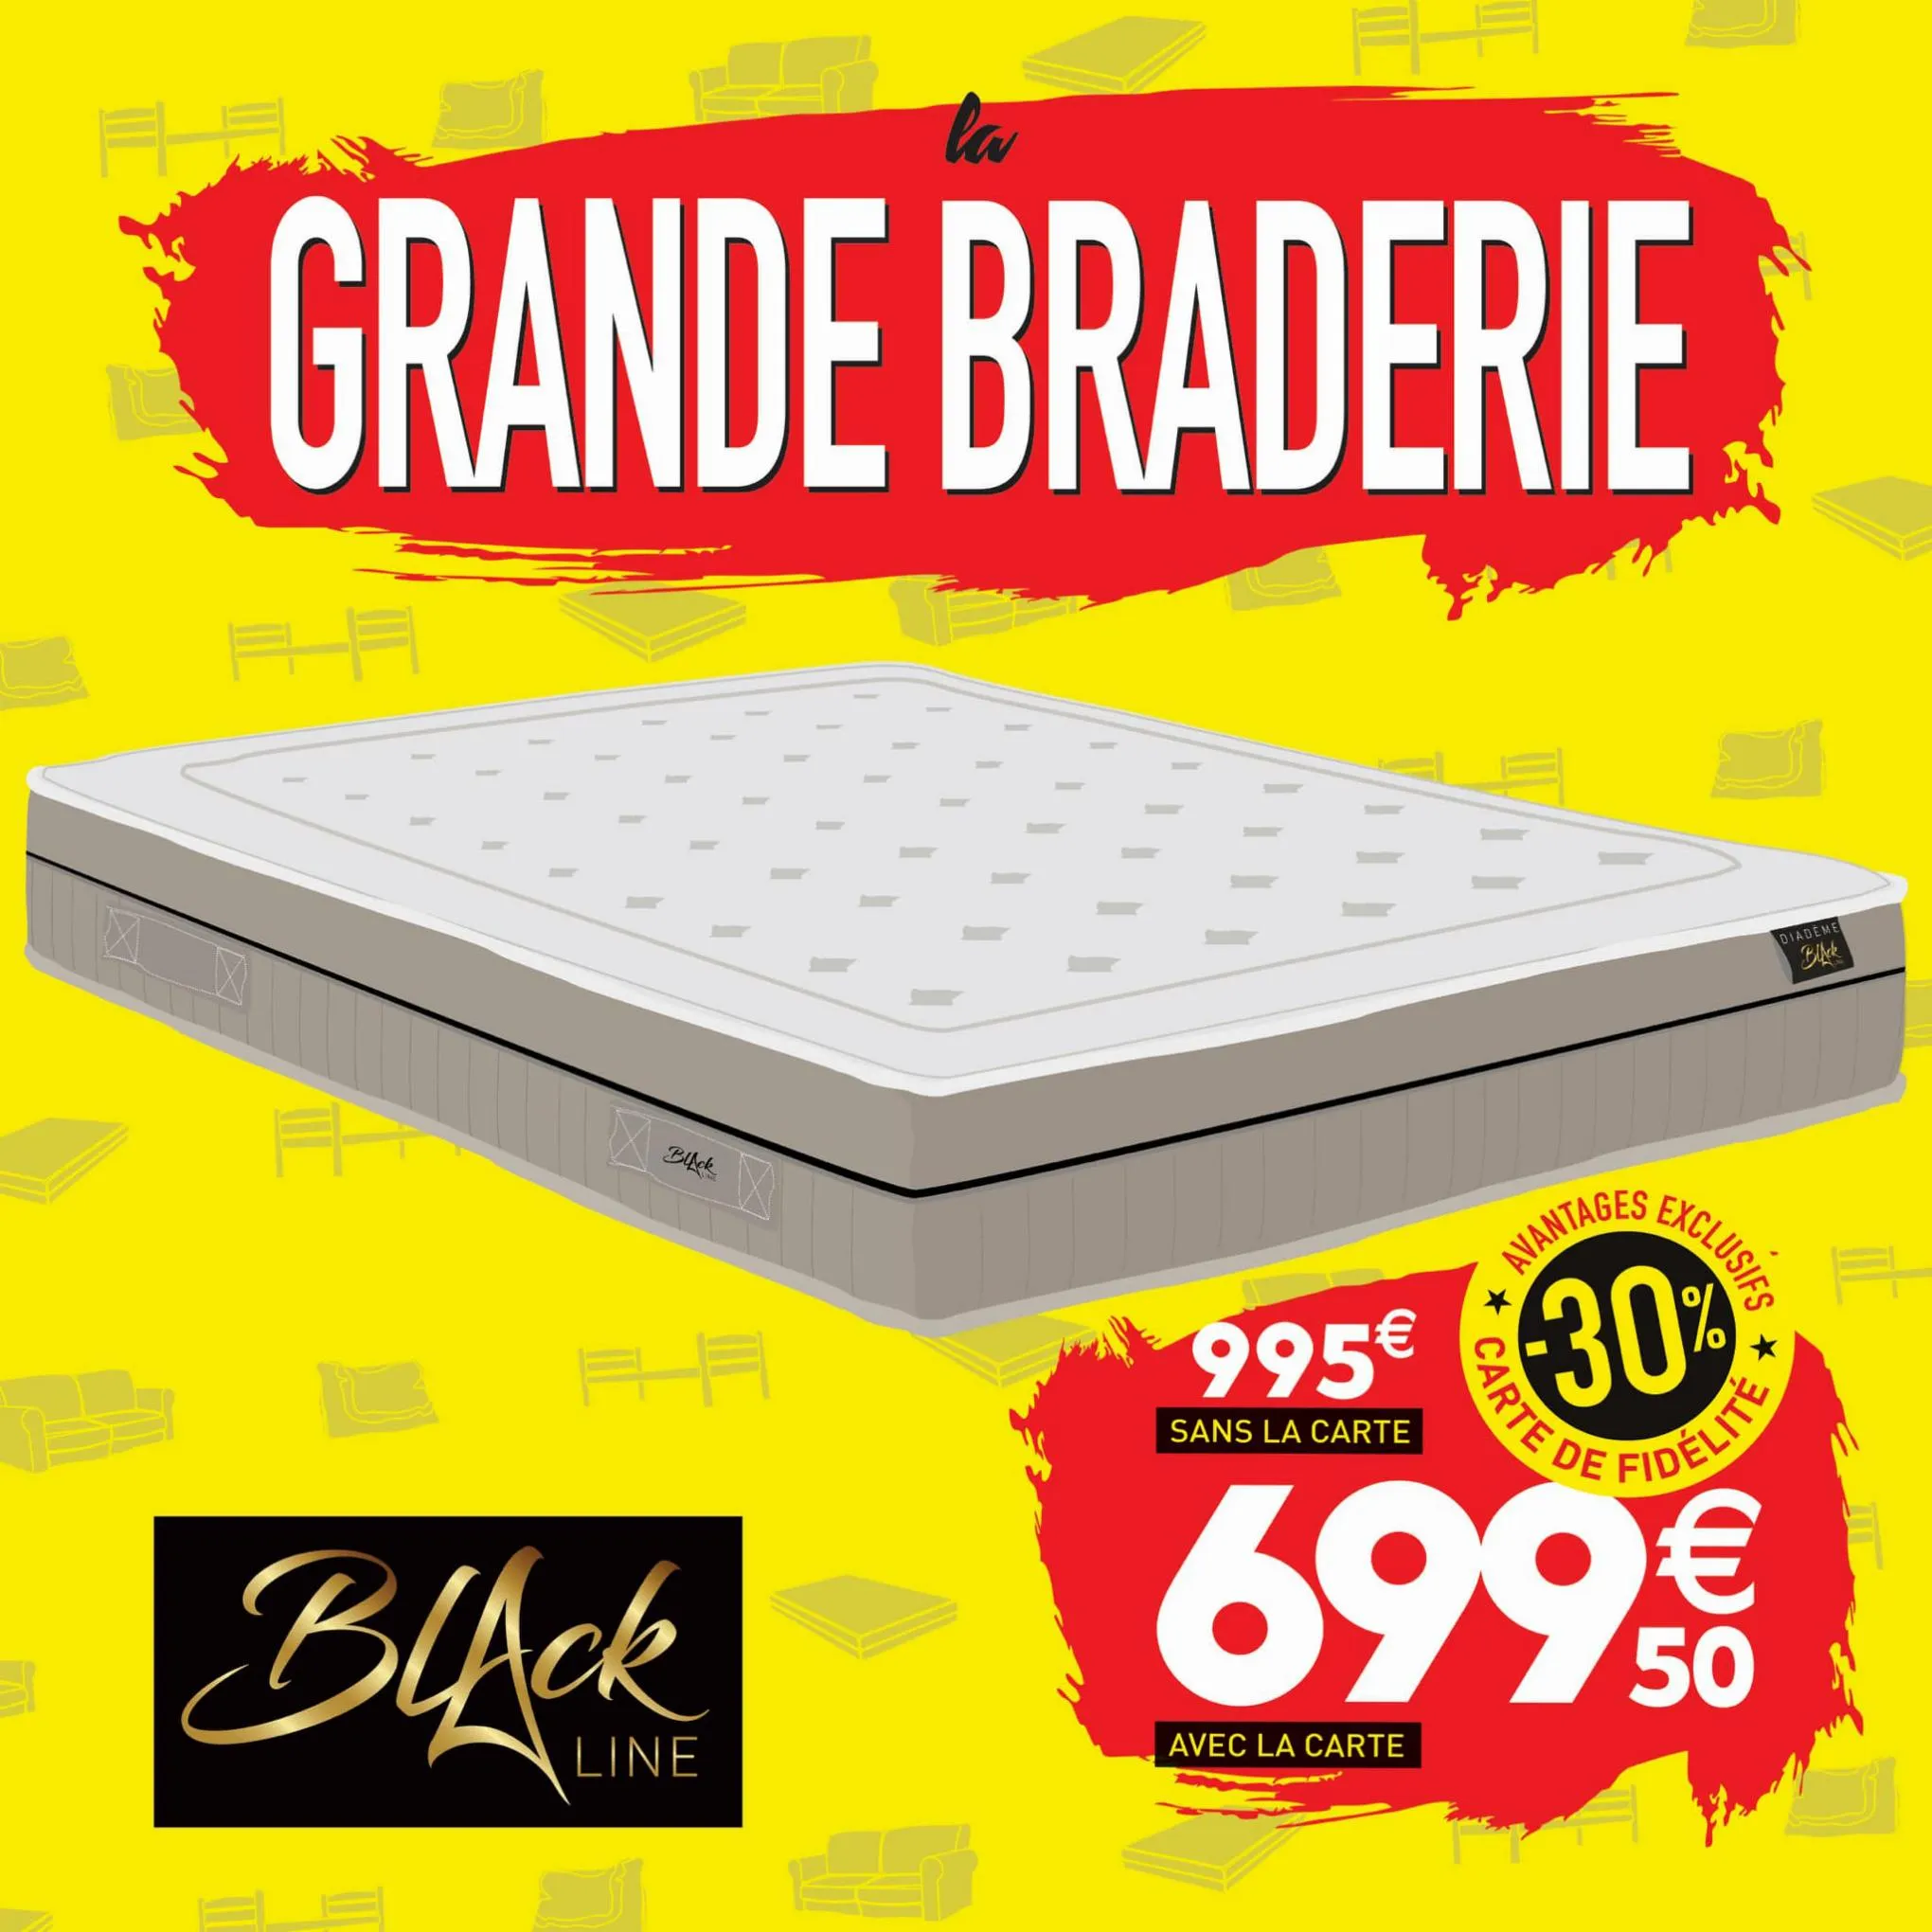 Catalogue La grande braderie, page 00004